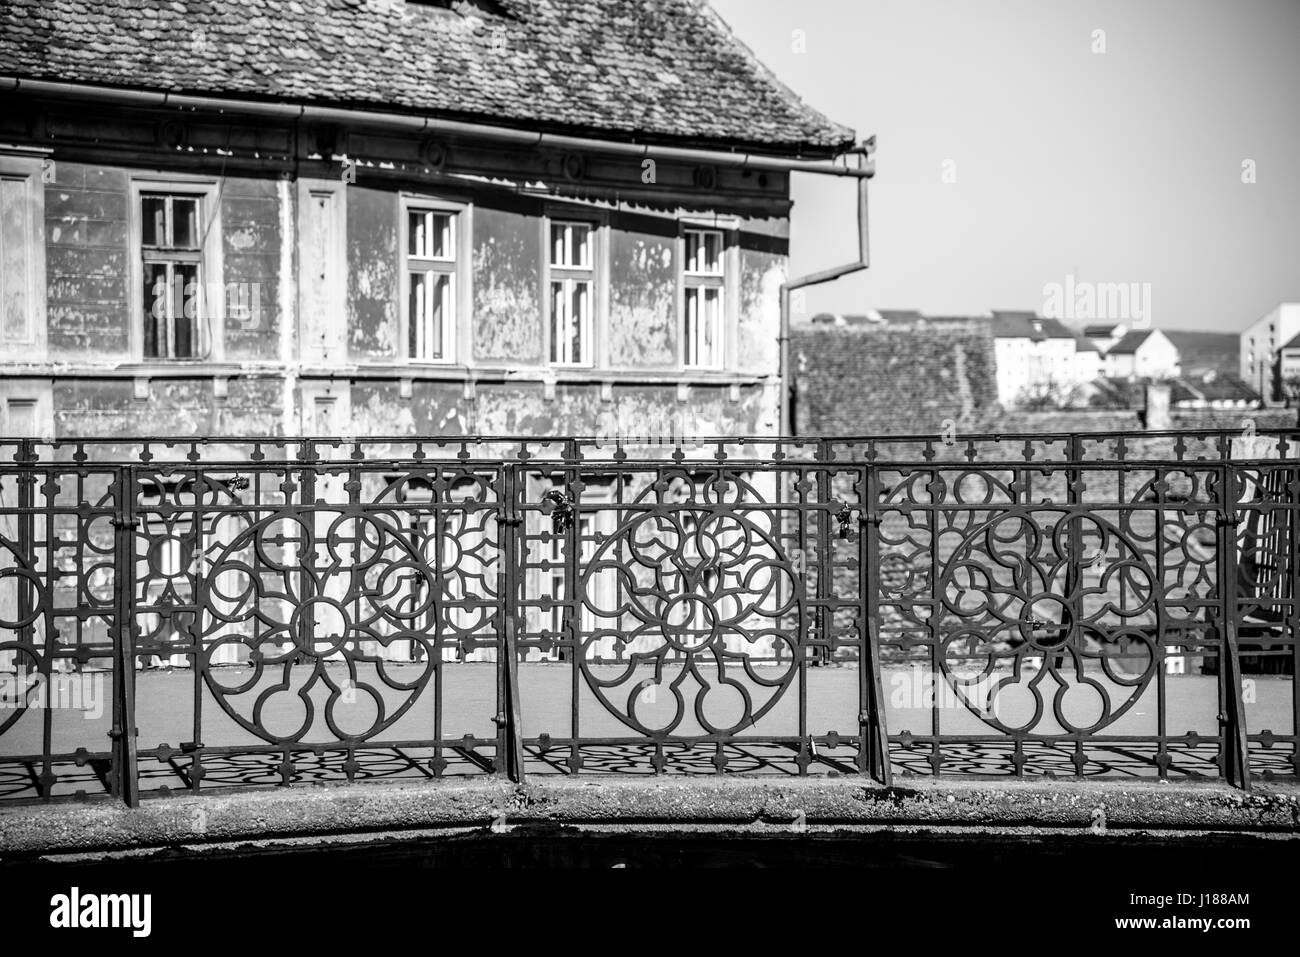 Liars Bridge from Sibiu, Romania - Black and White Stock Photo